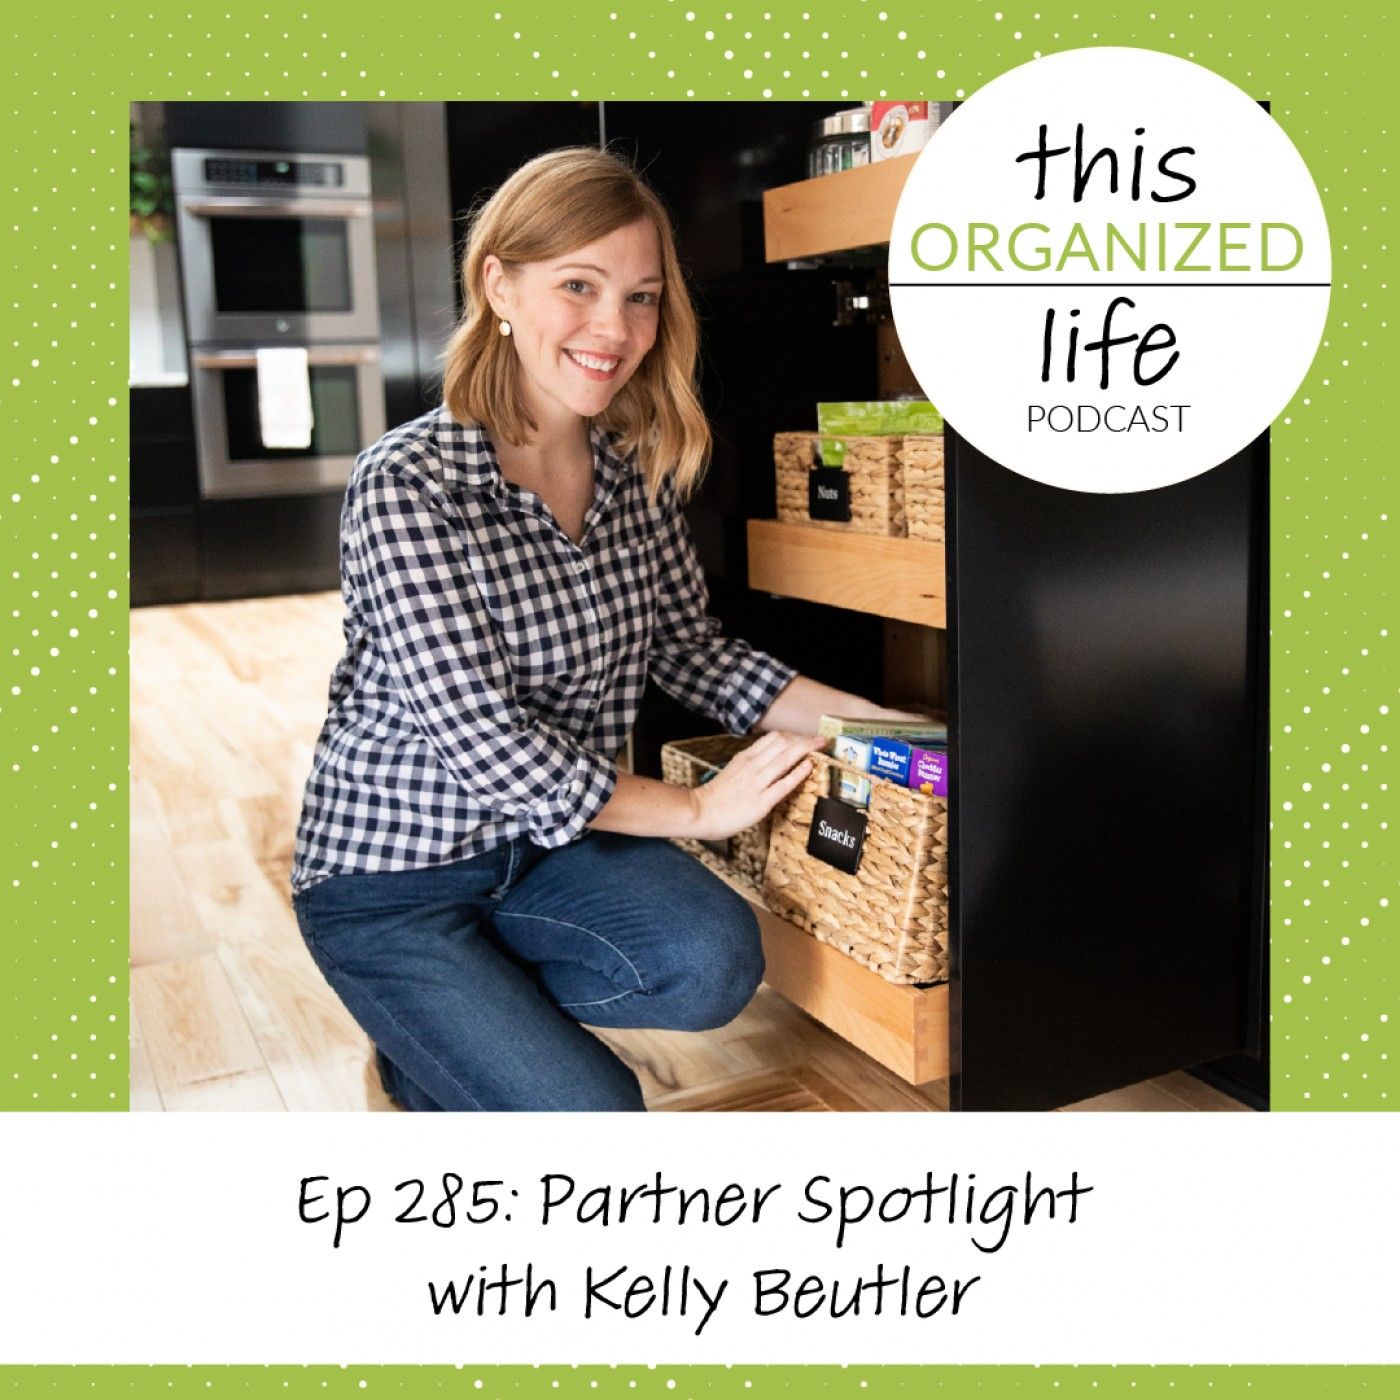 Ep 285: Partner Spotlight with Kelly Beutler